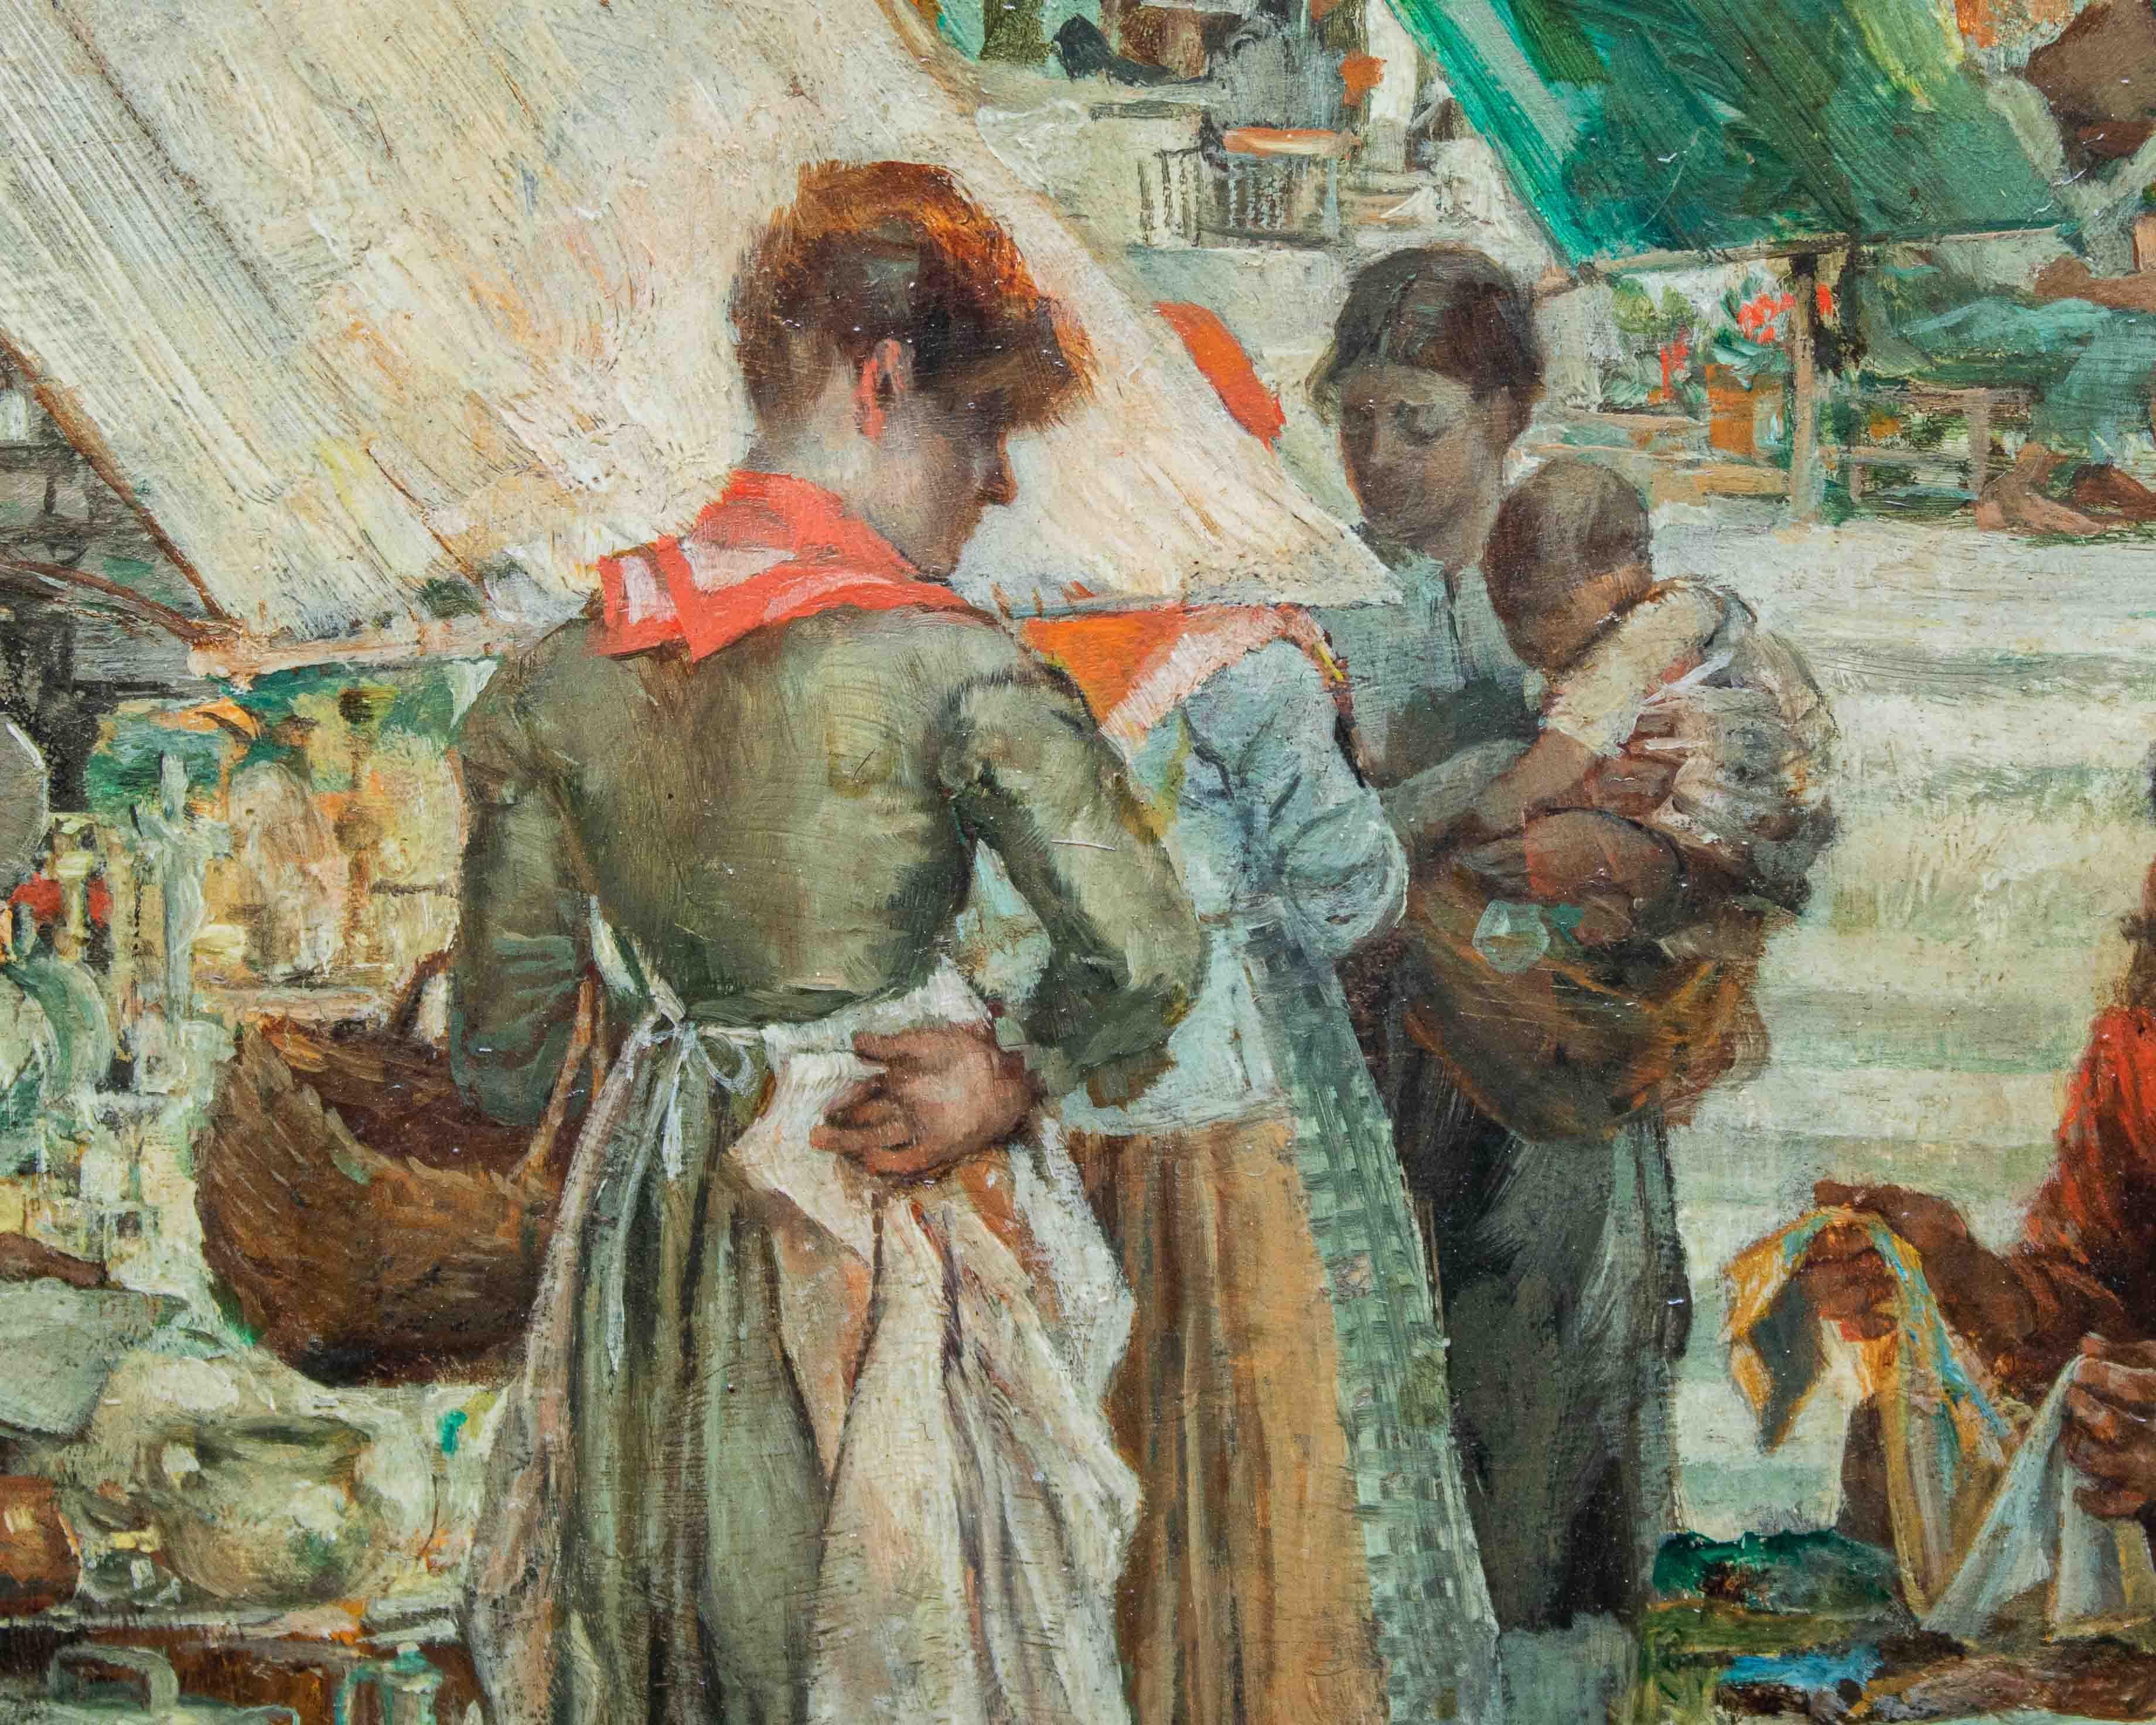 19th Century Market Scene Painting William Henry Pike Oil on Panel 1